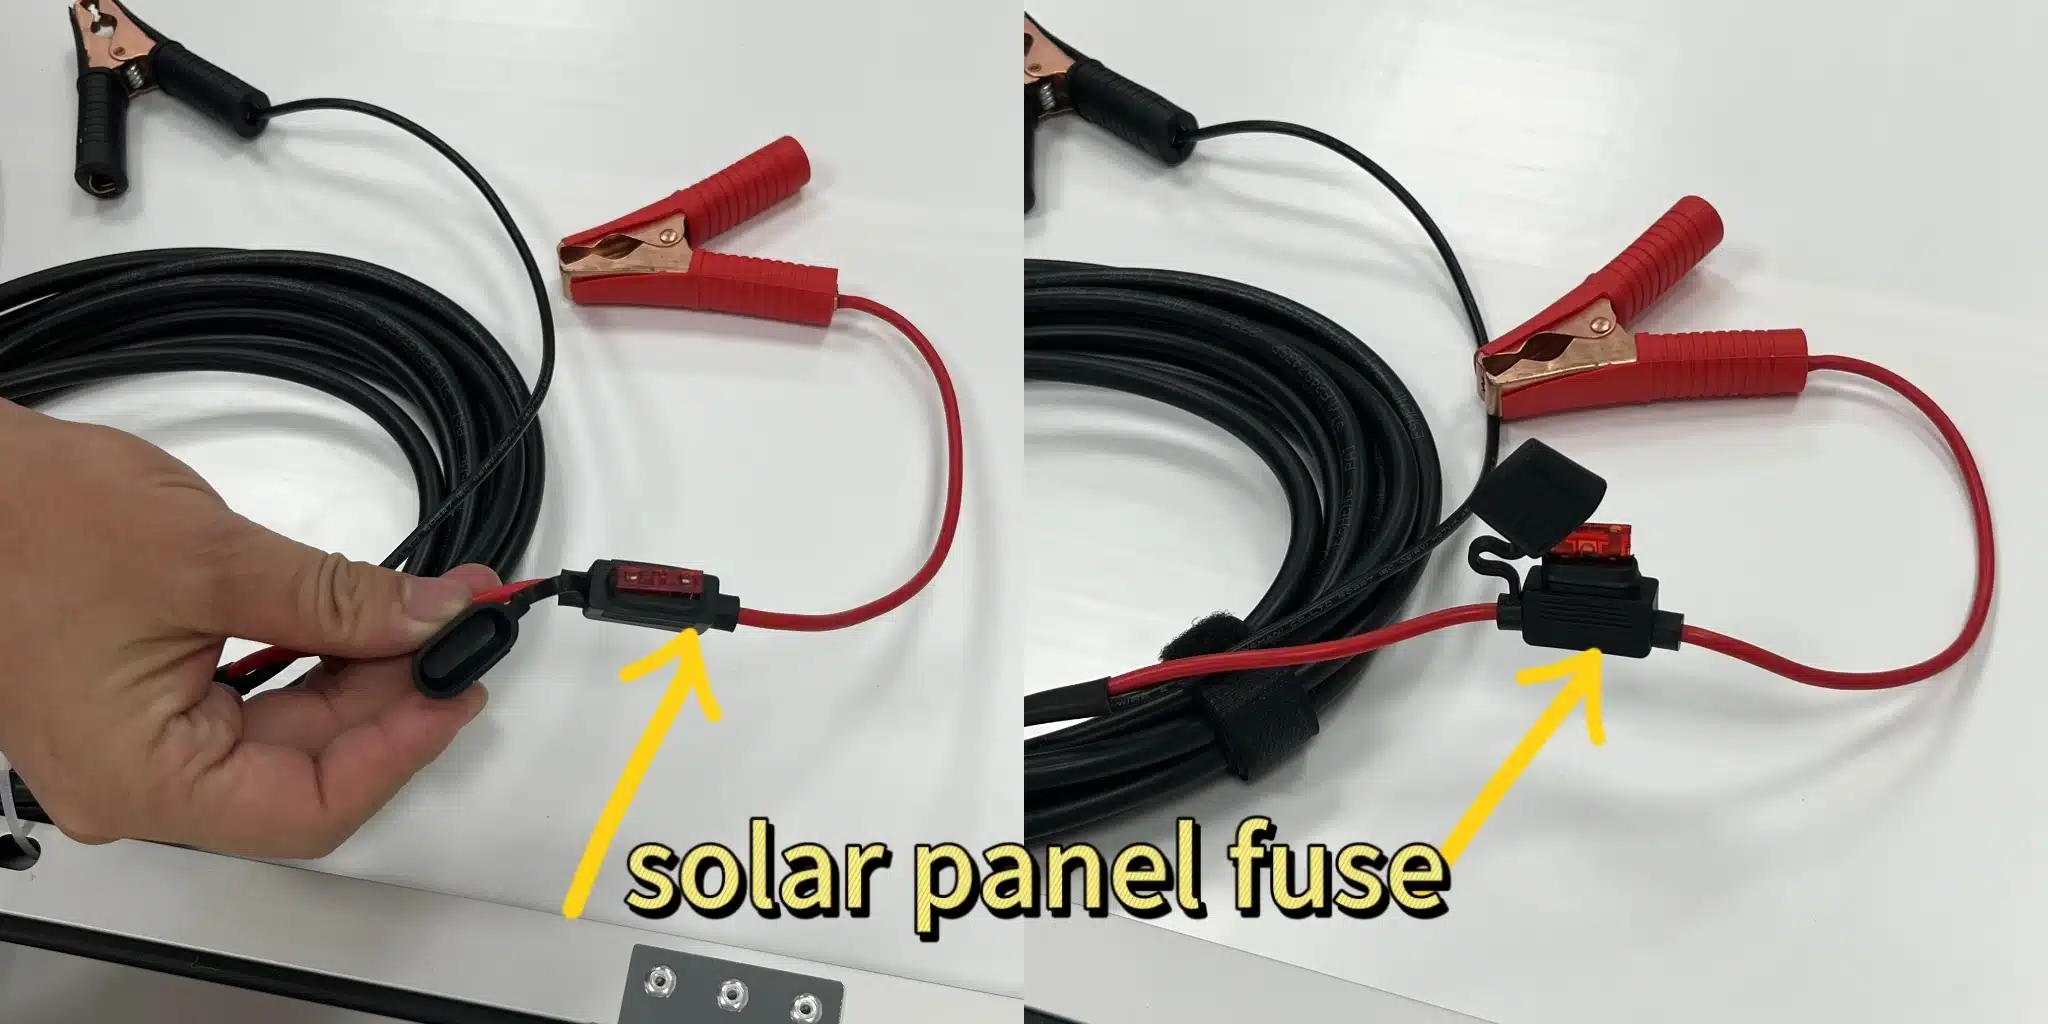 Fuse of solar panels designed to prevent overloading